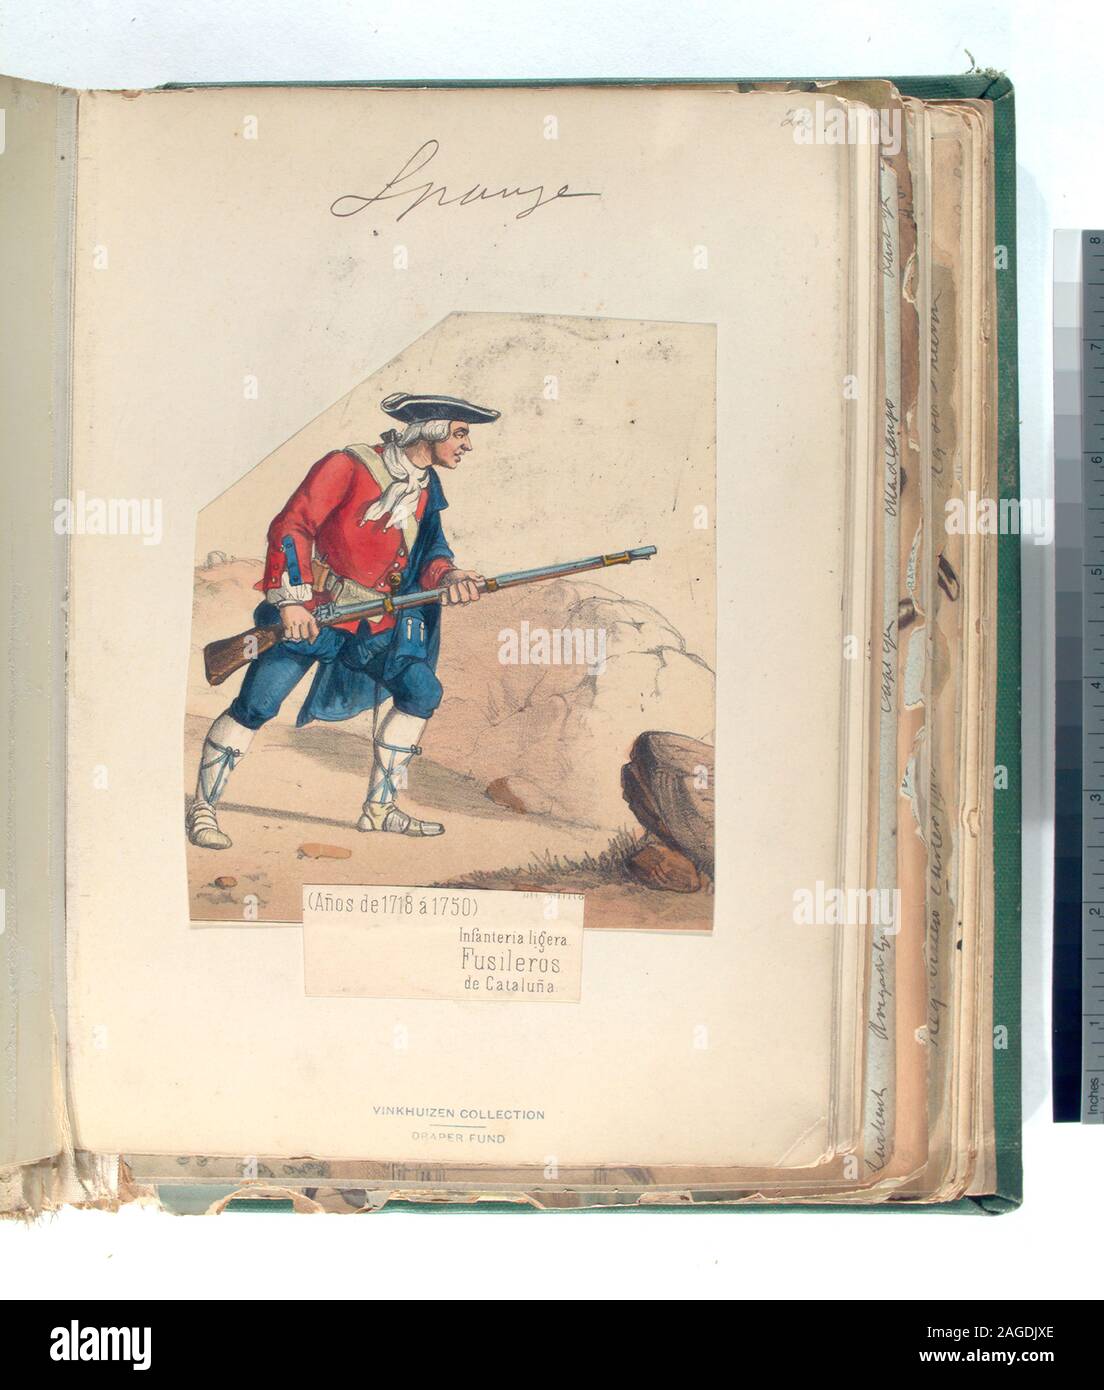 The Draper Fund; Infanteria ligera. Fusileros de Cataluña. (Años de 1718 á 1750) Stock Photo